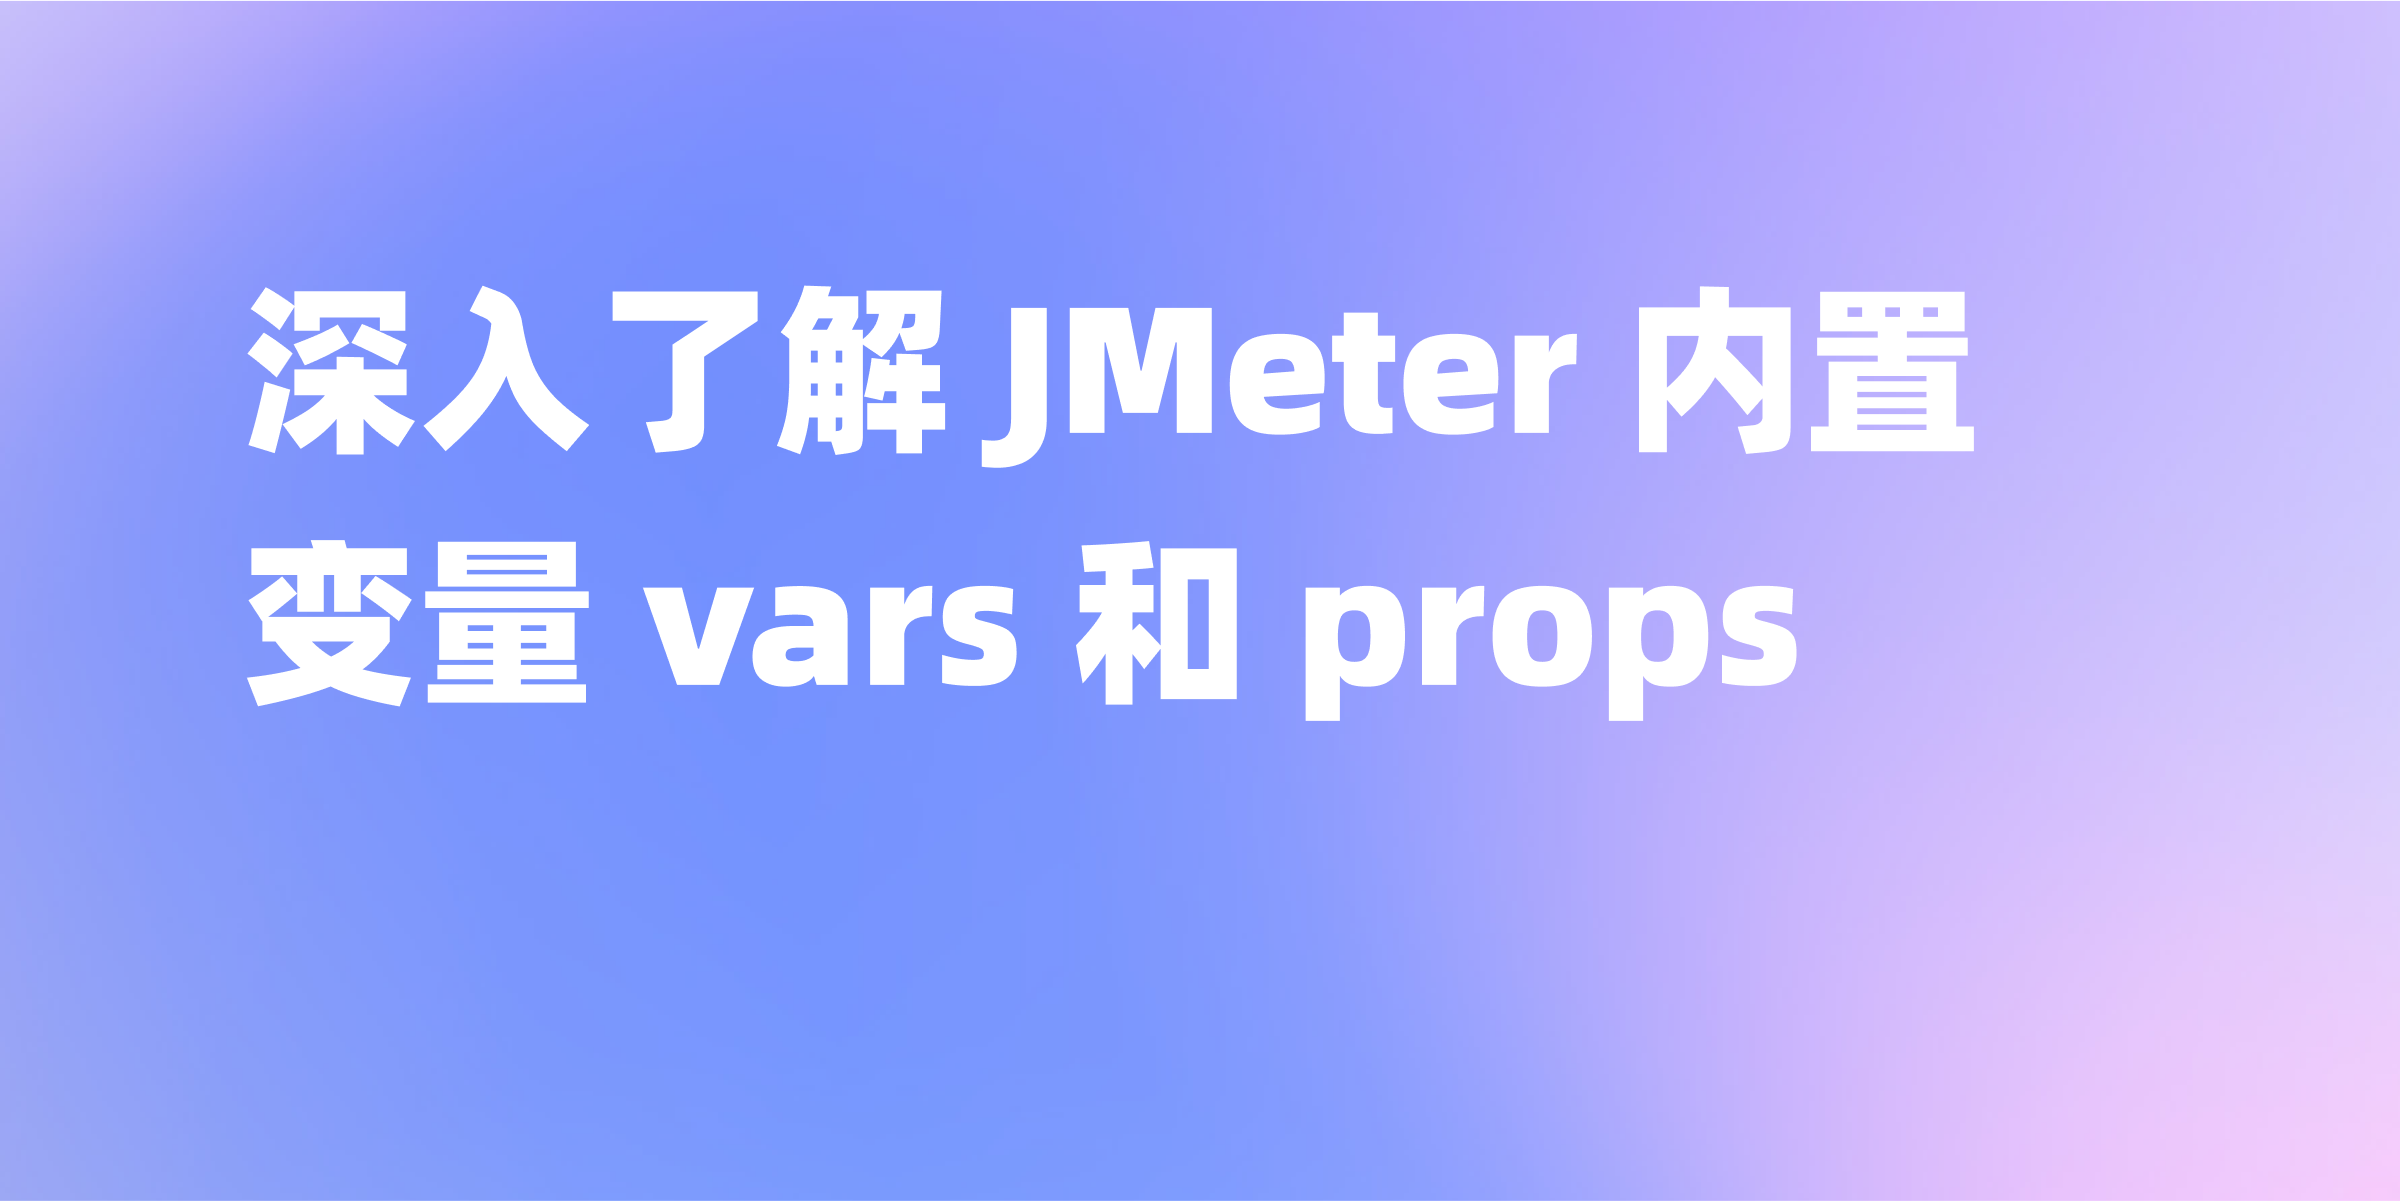 JMeter 内置变量 vars 和 props 的使用详解